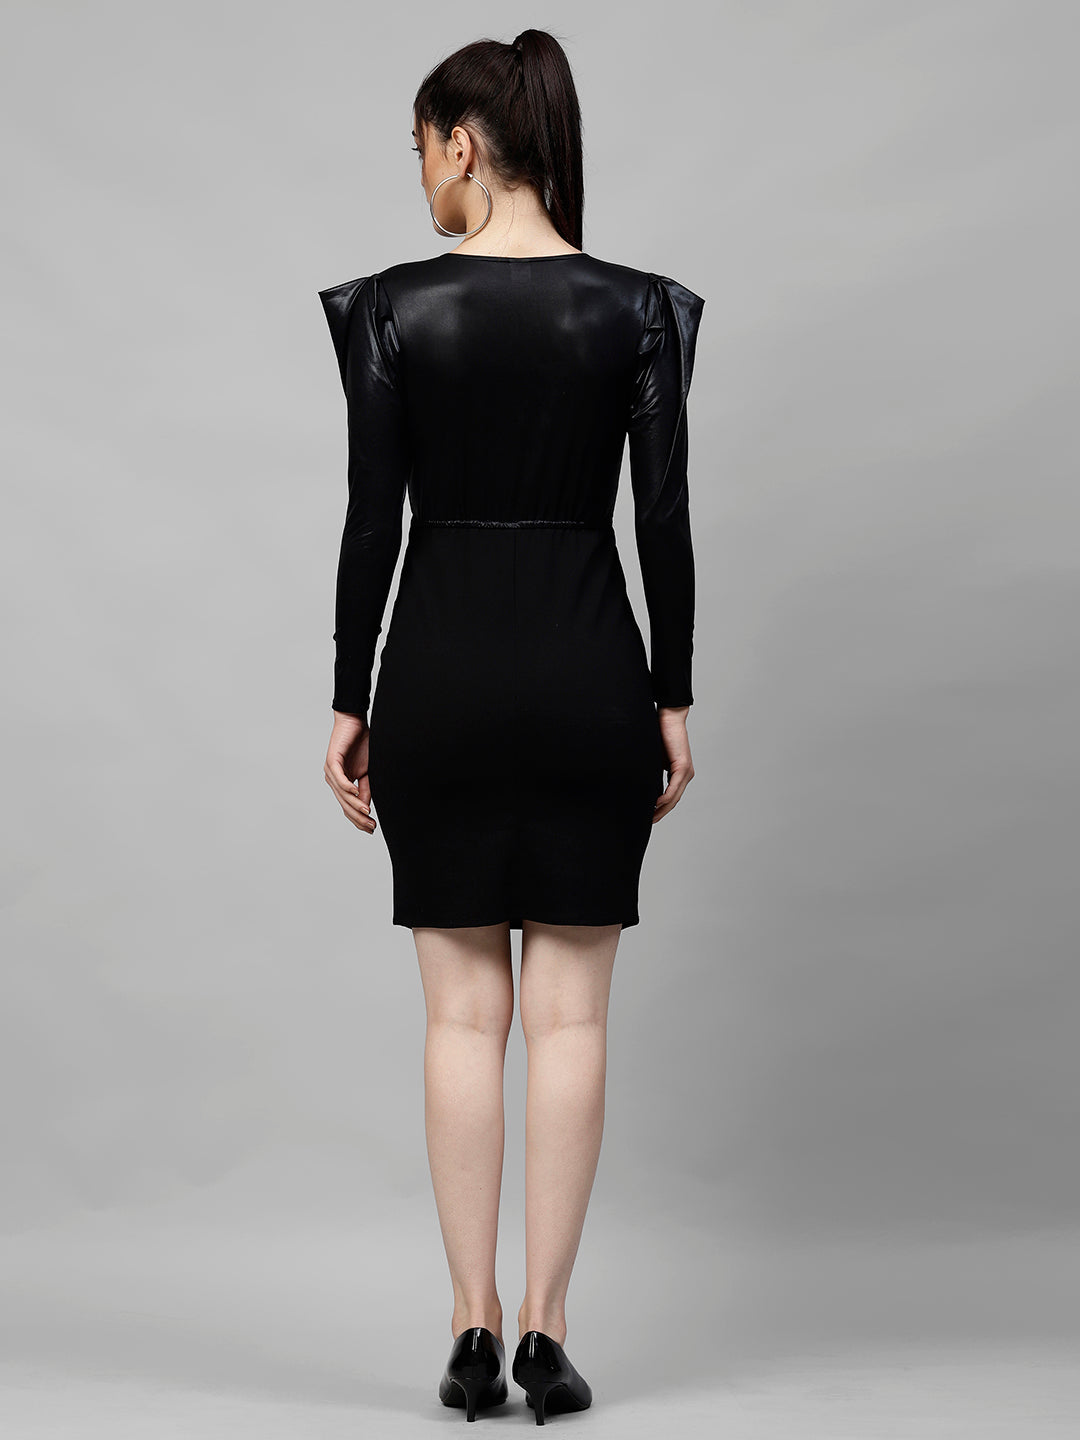 Athena Women Black Solid Sheath Dress with Puff Sleeves - Athena Lifestyle